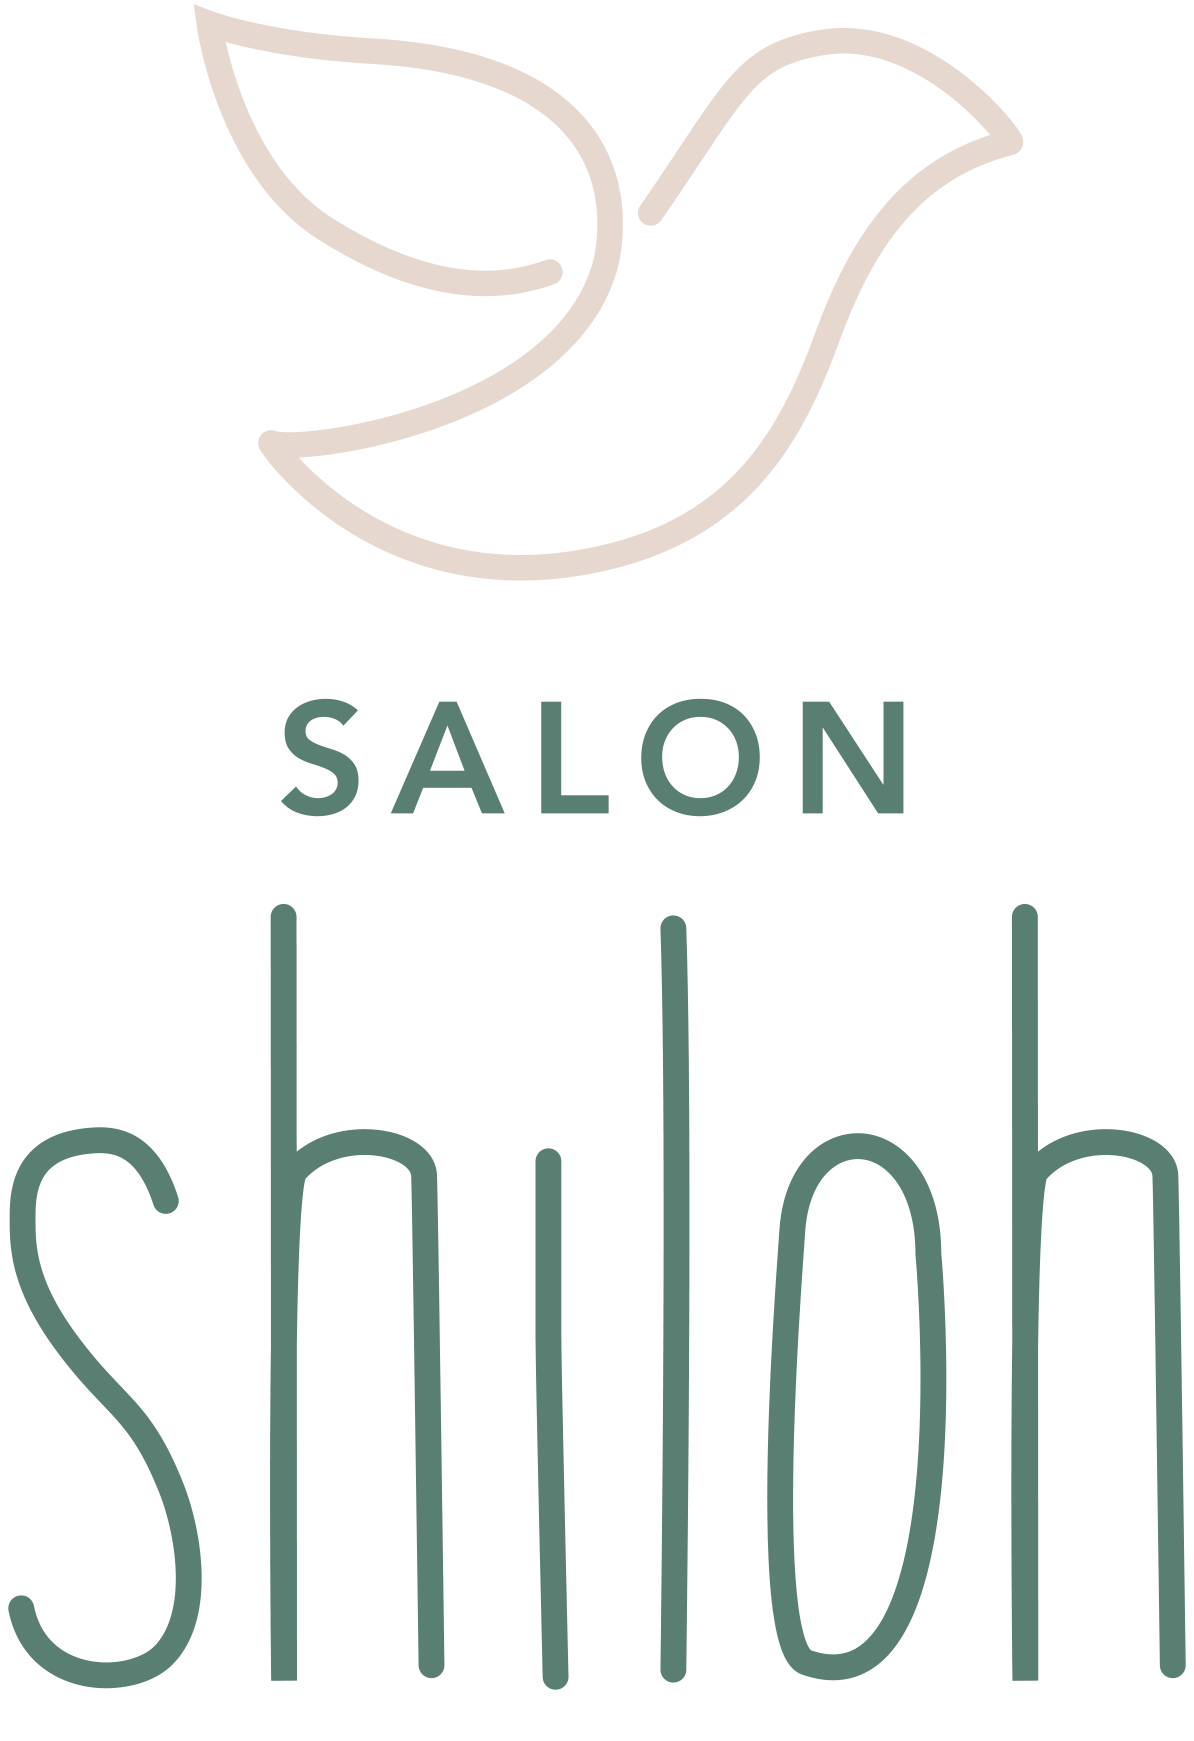 Salon Shiloh